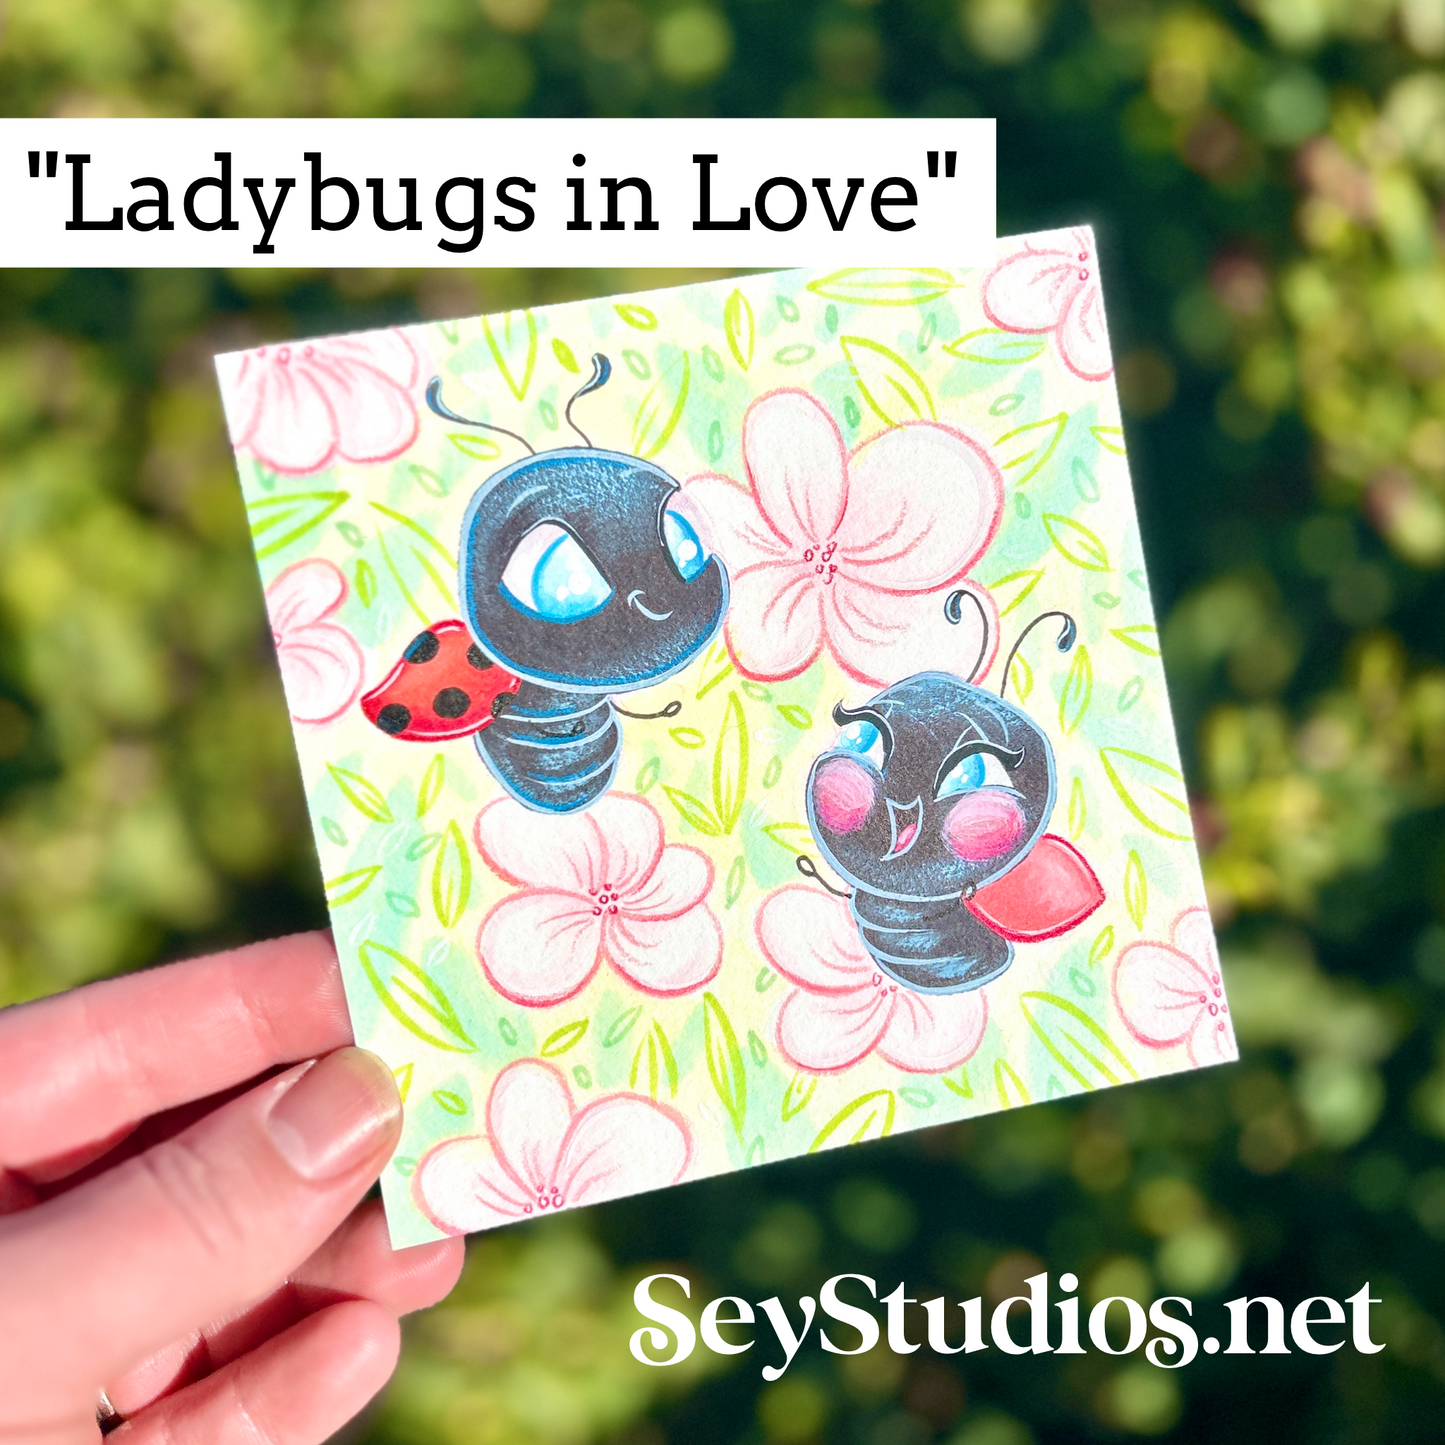 Original - "Ladybugs in Love”